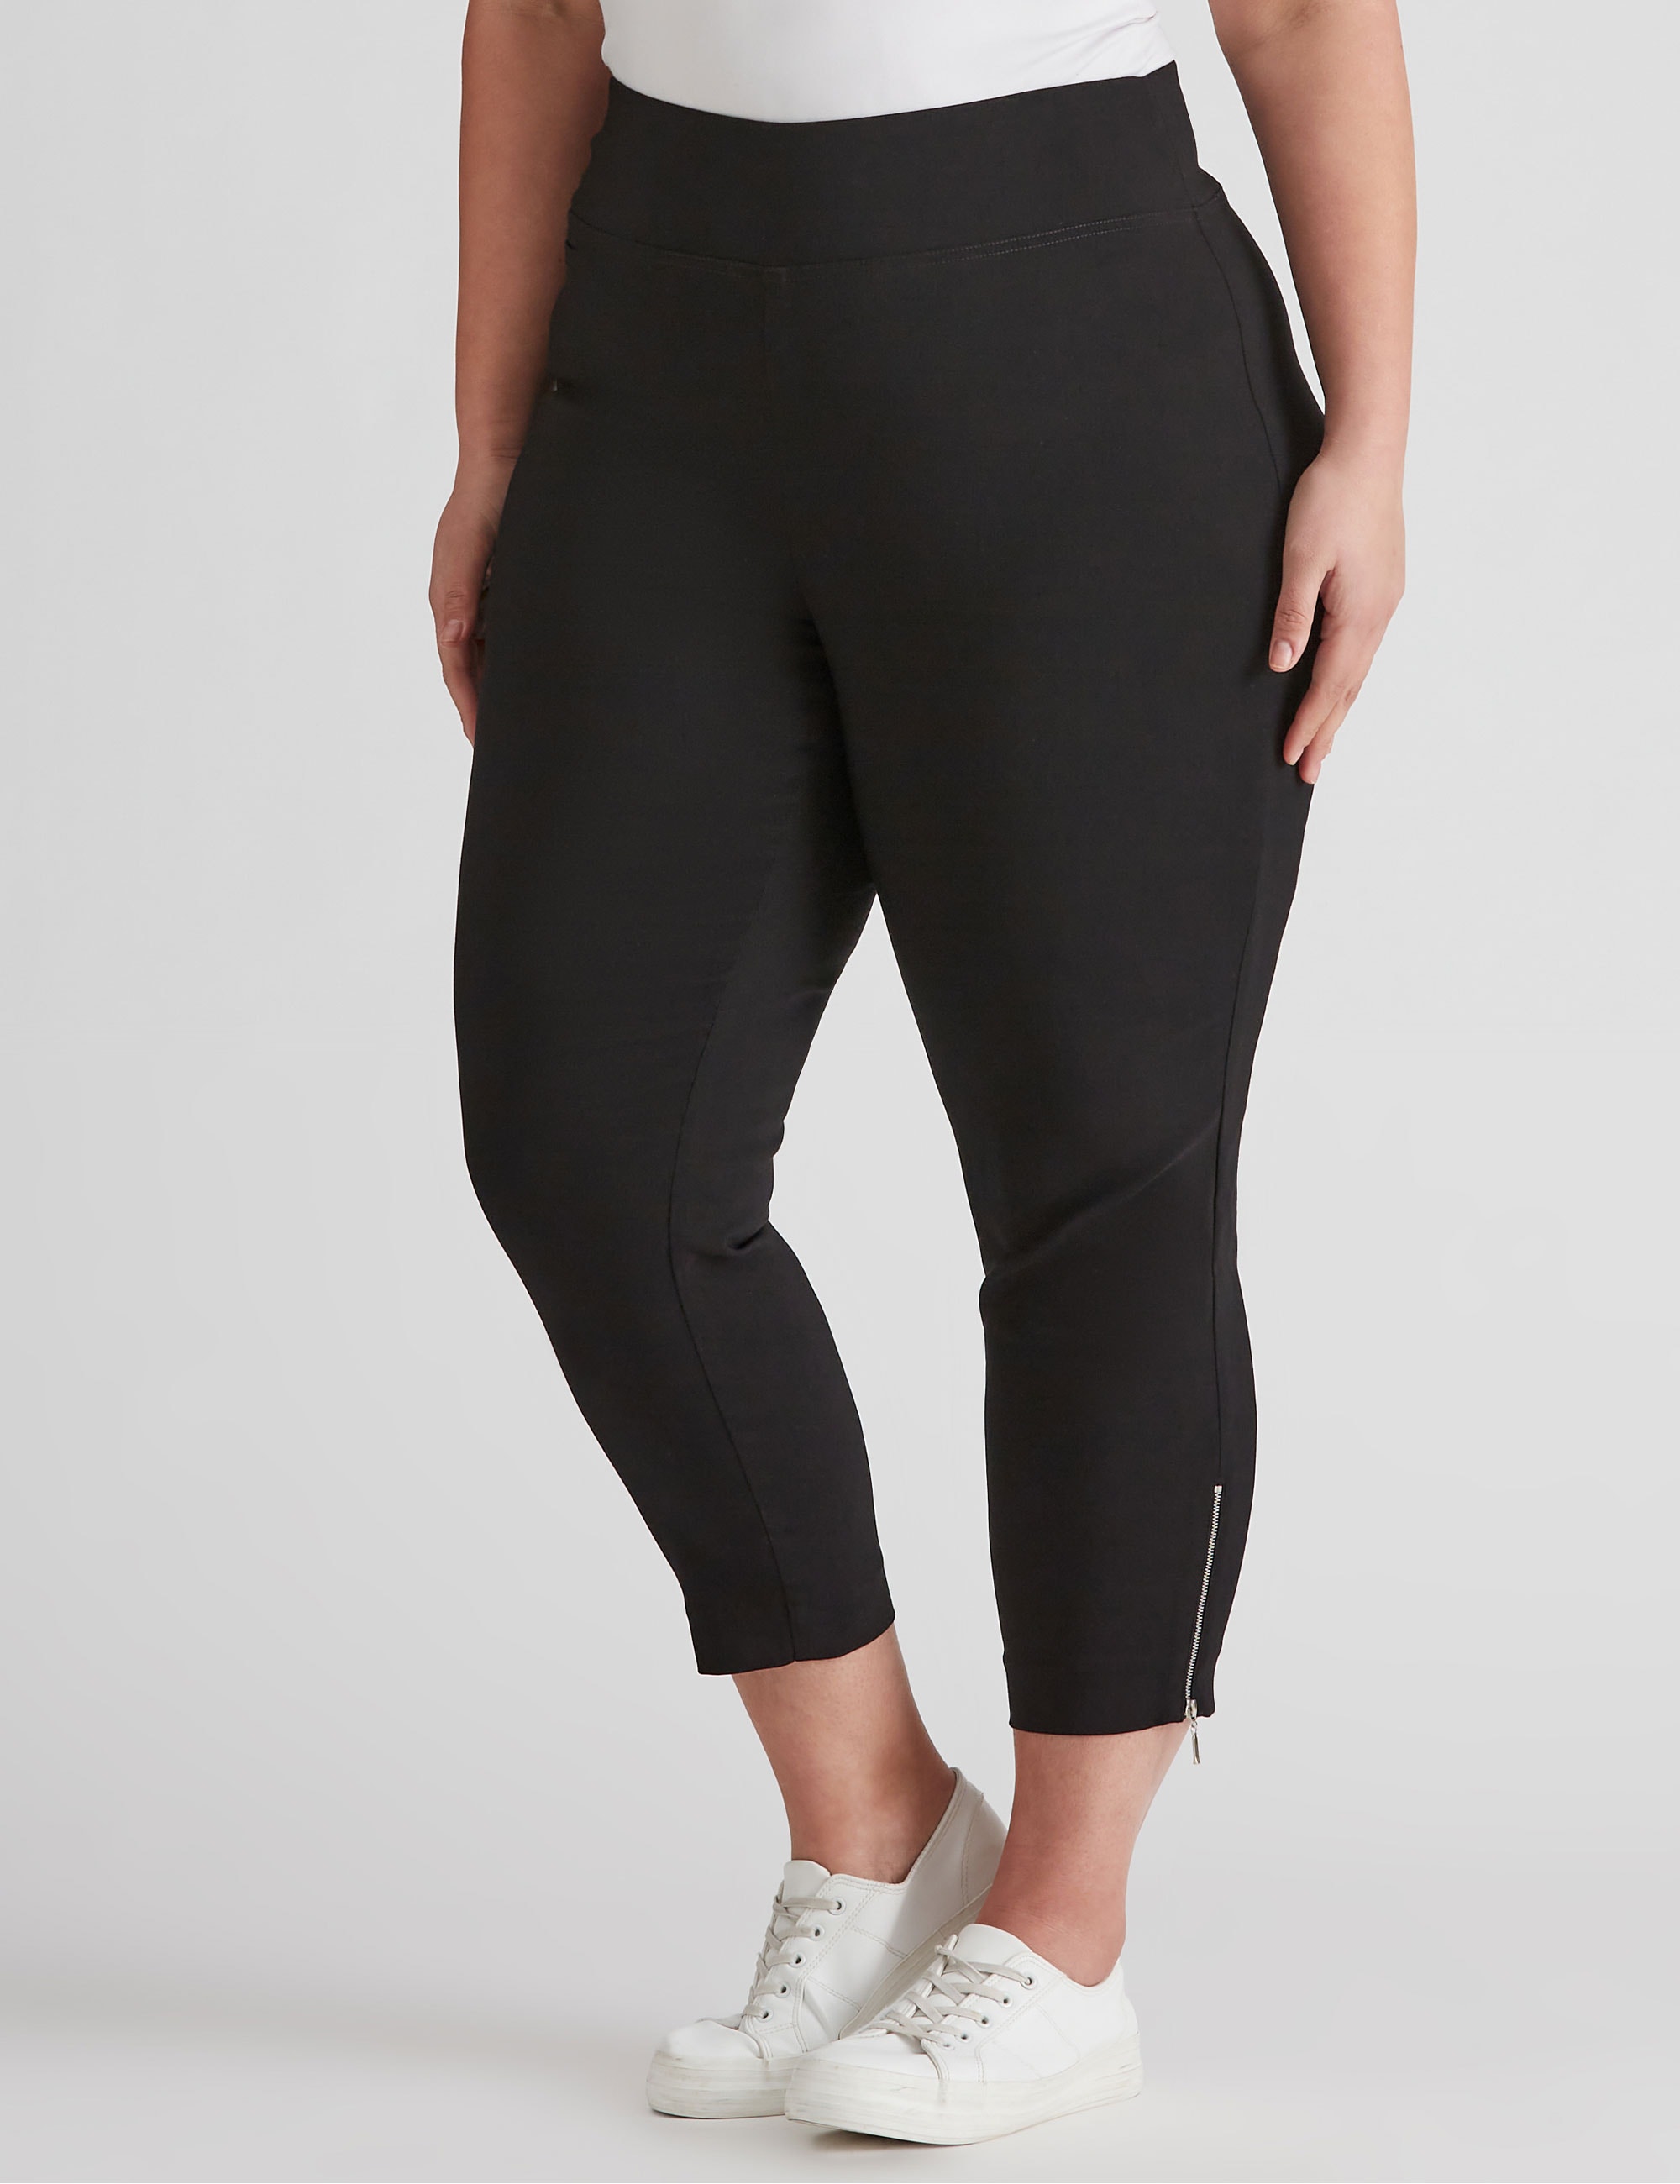 Women Leggings Sports Trousers Athletic Gym Workout Fitness Yoga Leggings  Pants Plus Size XS-8XL